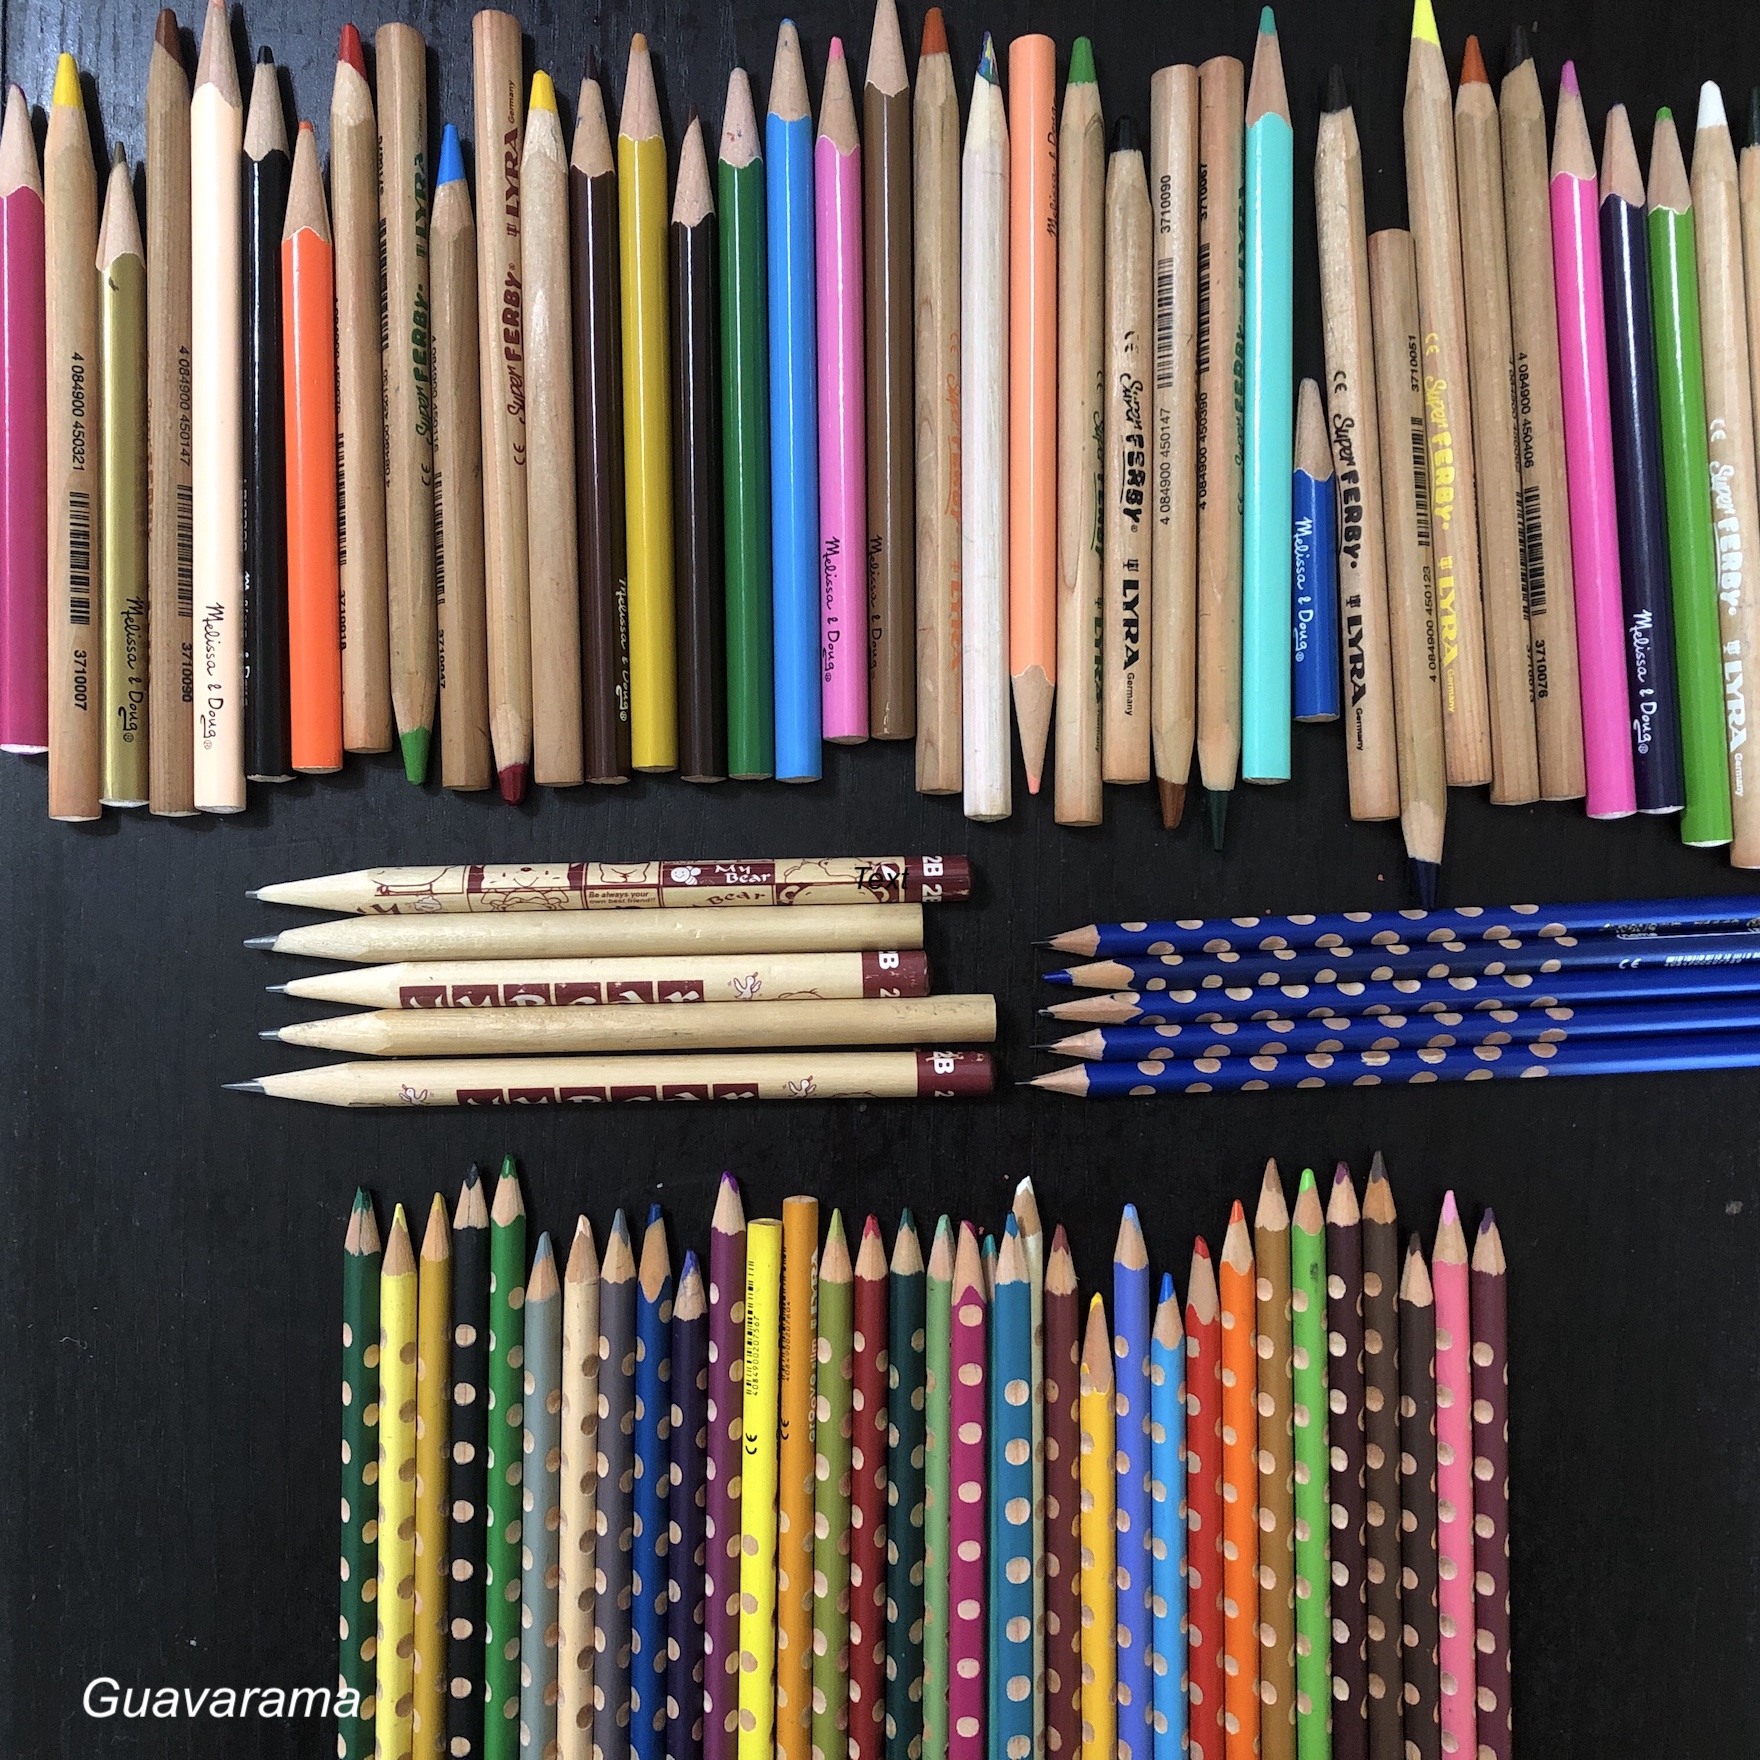 Faber-Castell Jumbo Beeswax Crayon Set, 24-Colors